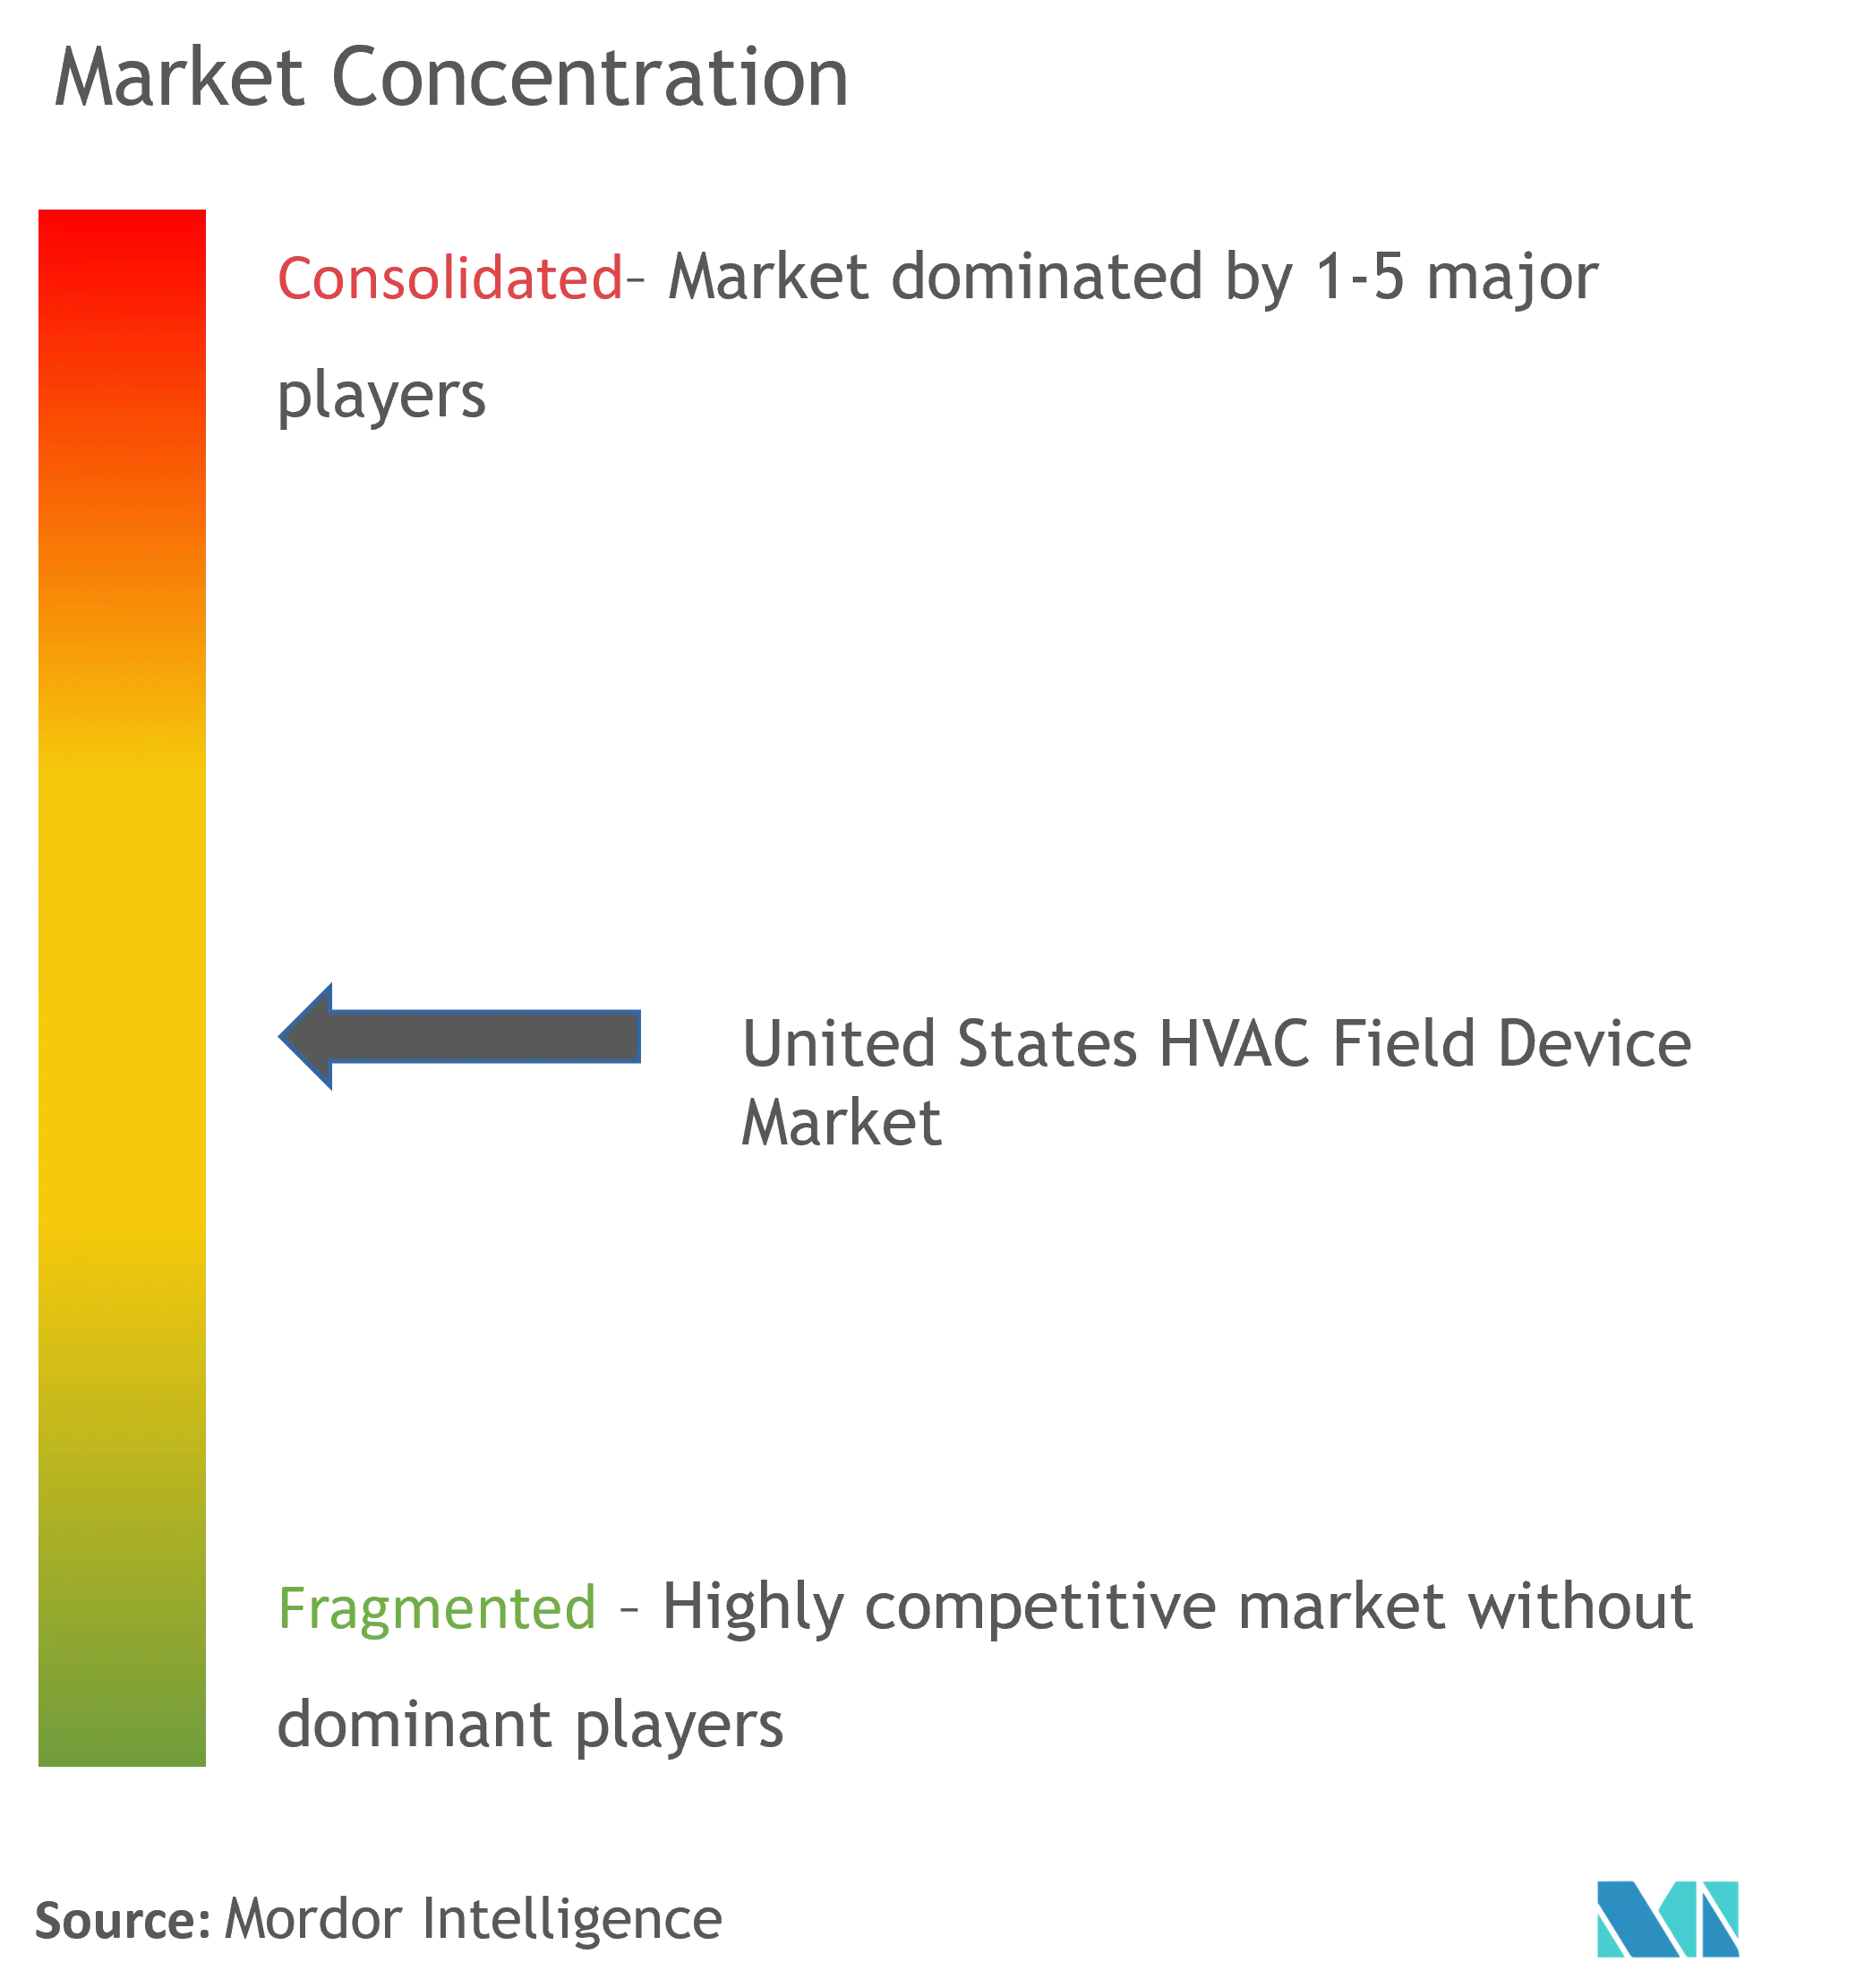 US HVAC Field Device Market Concentration